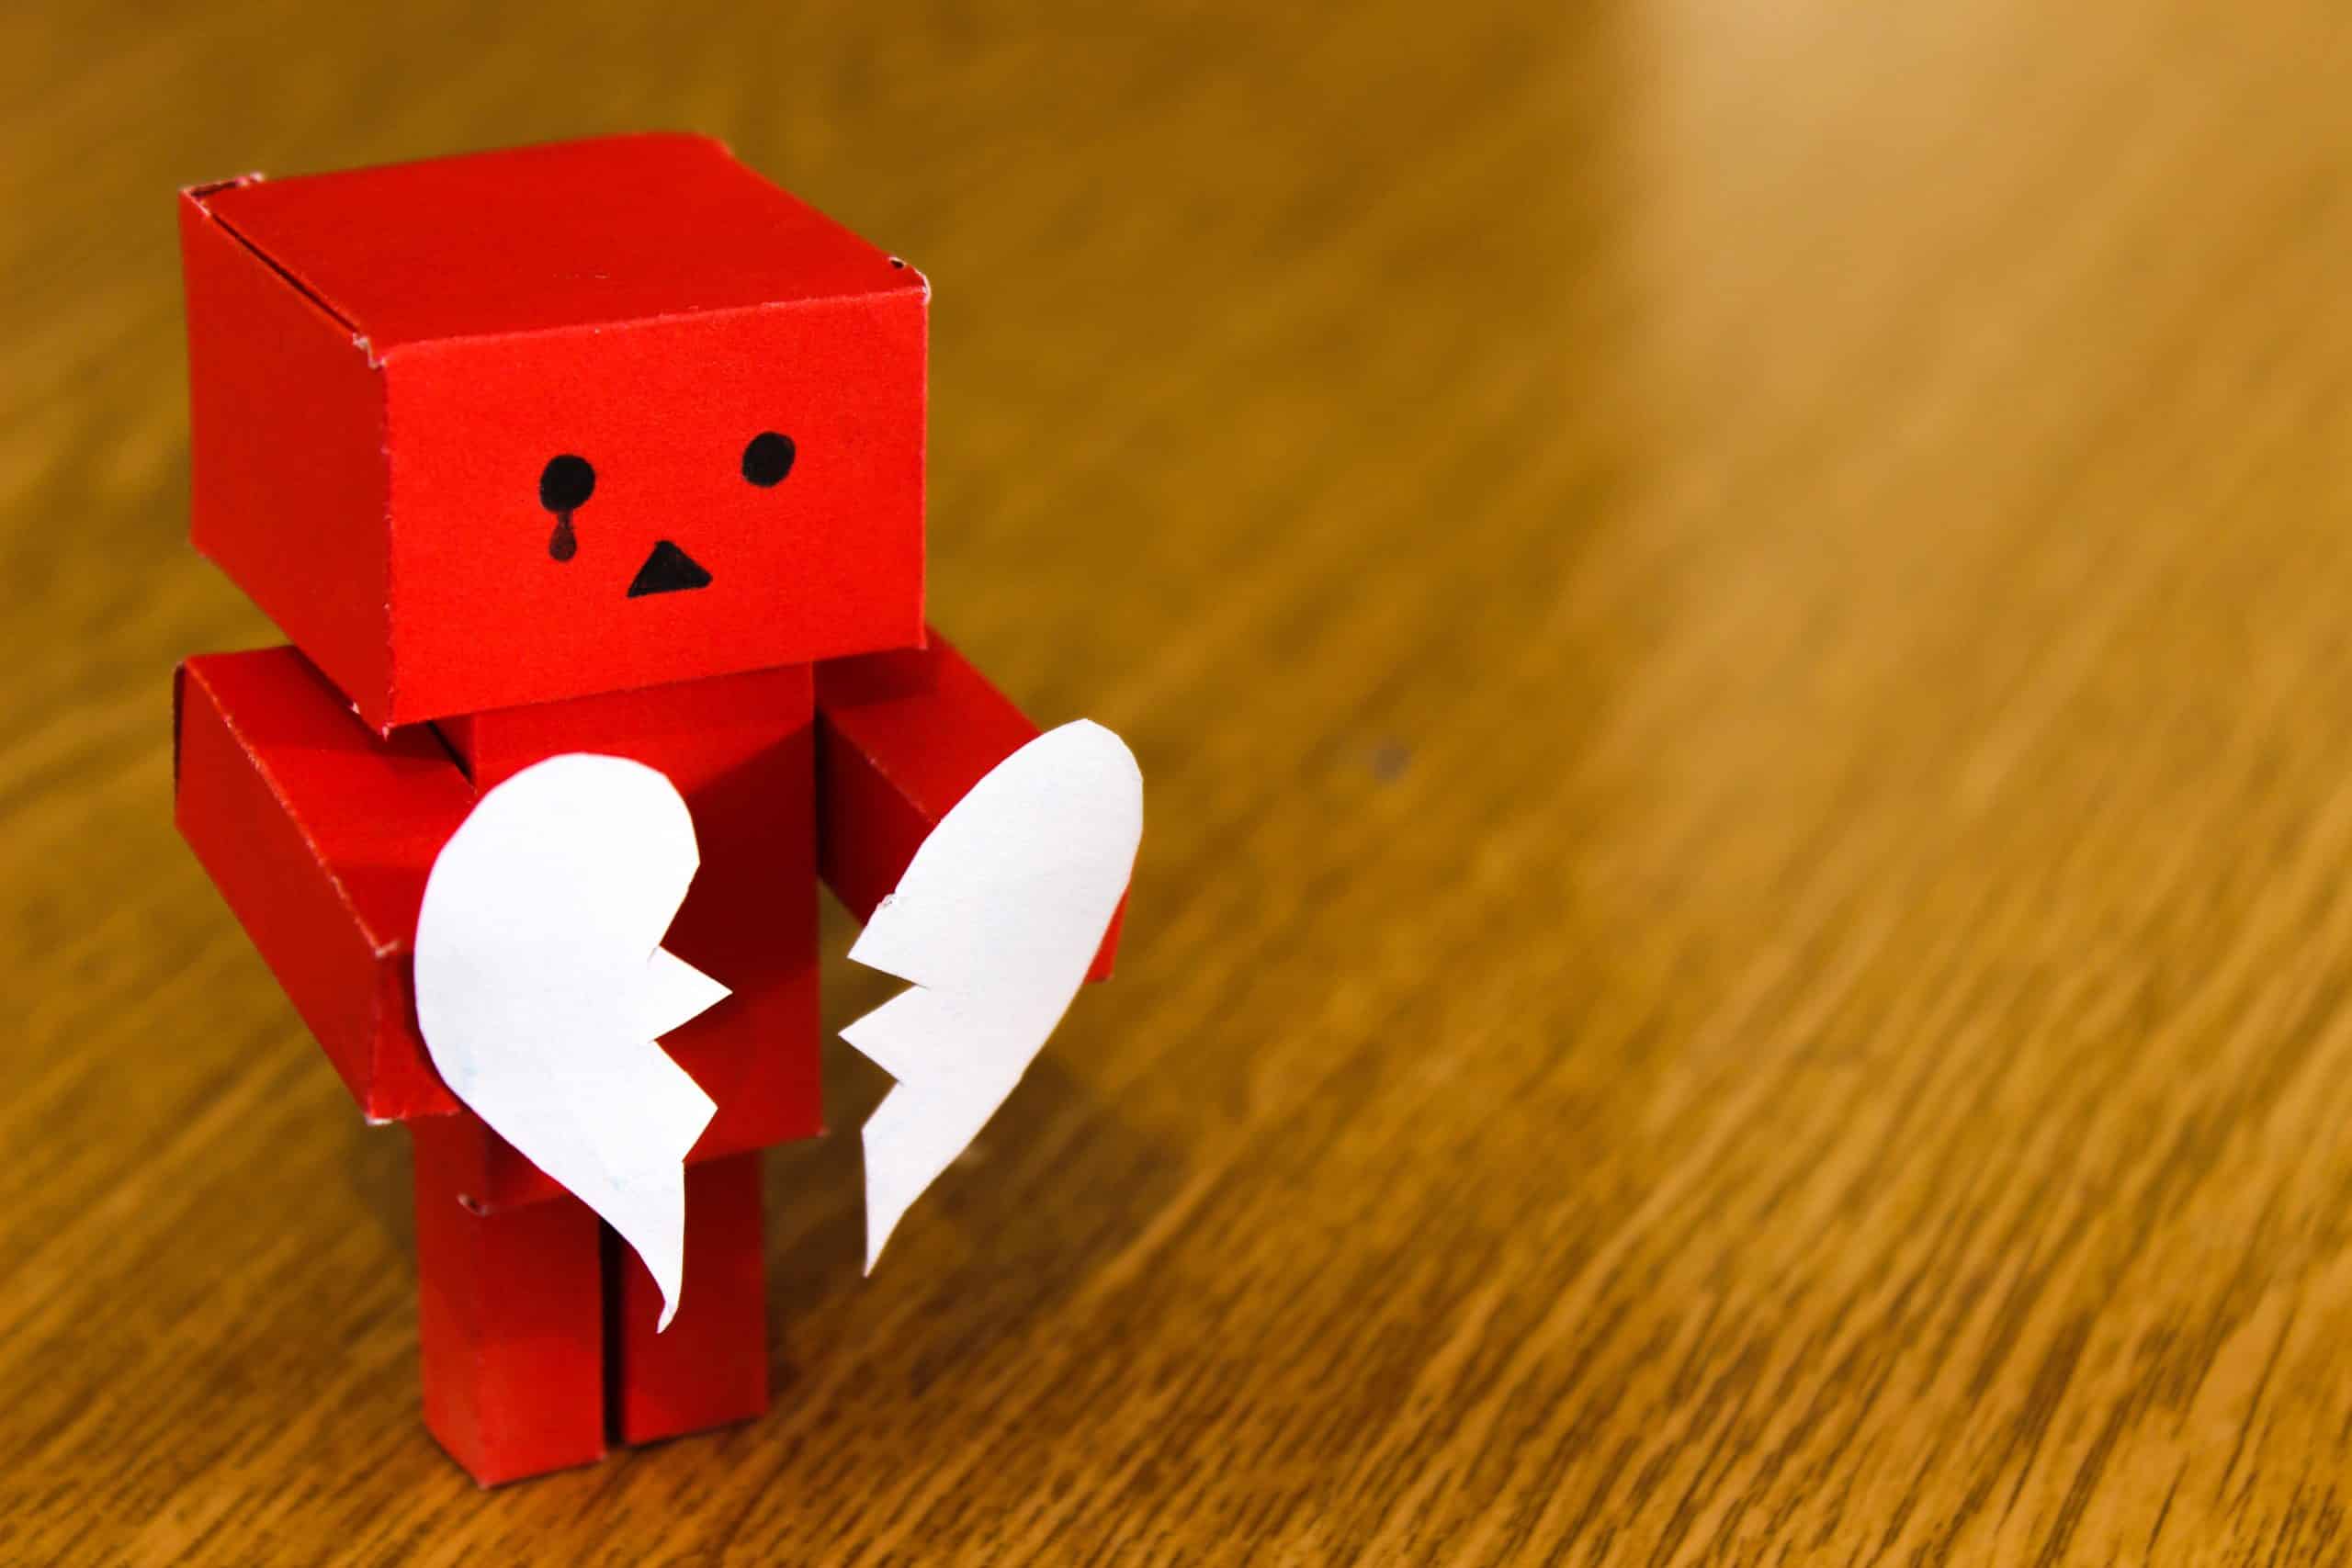 A sad cardboard figure holding a white broken heart